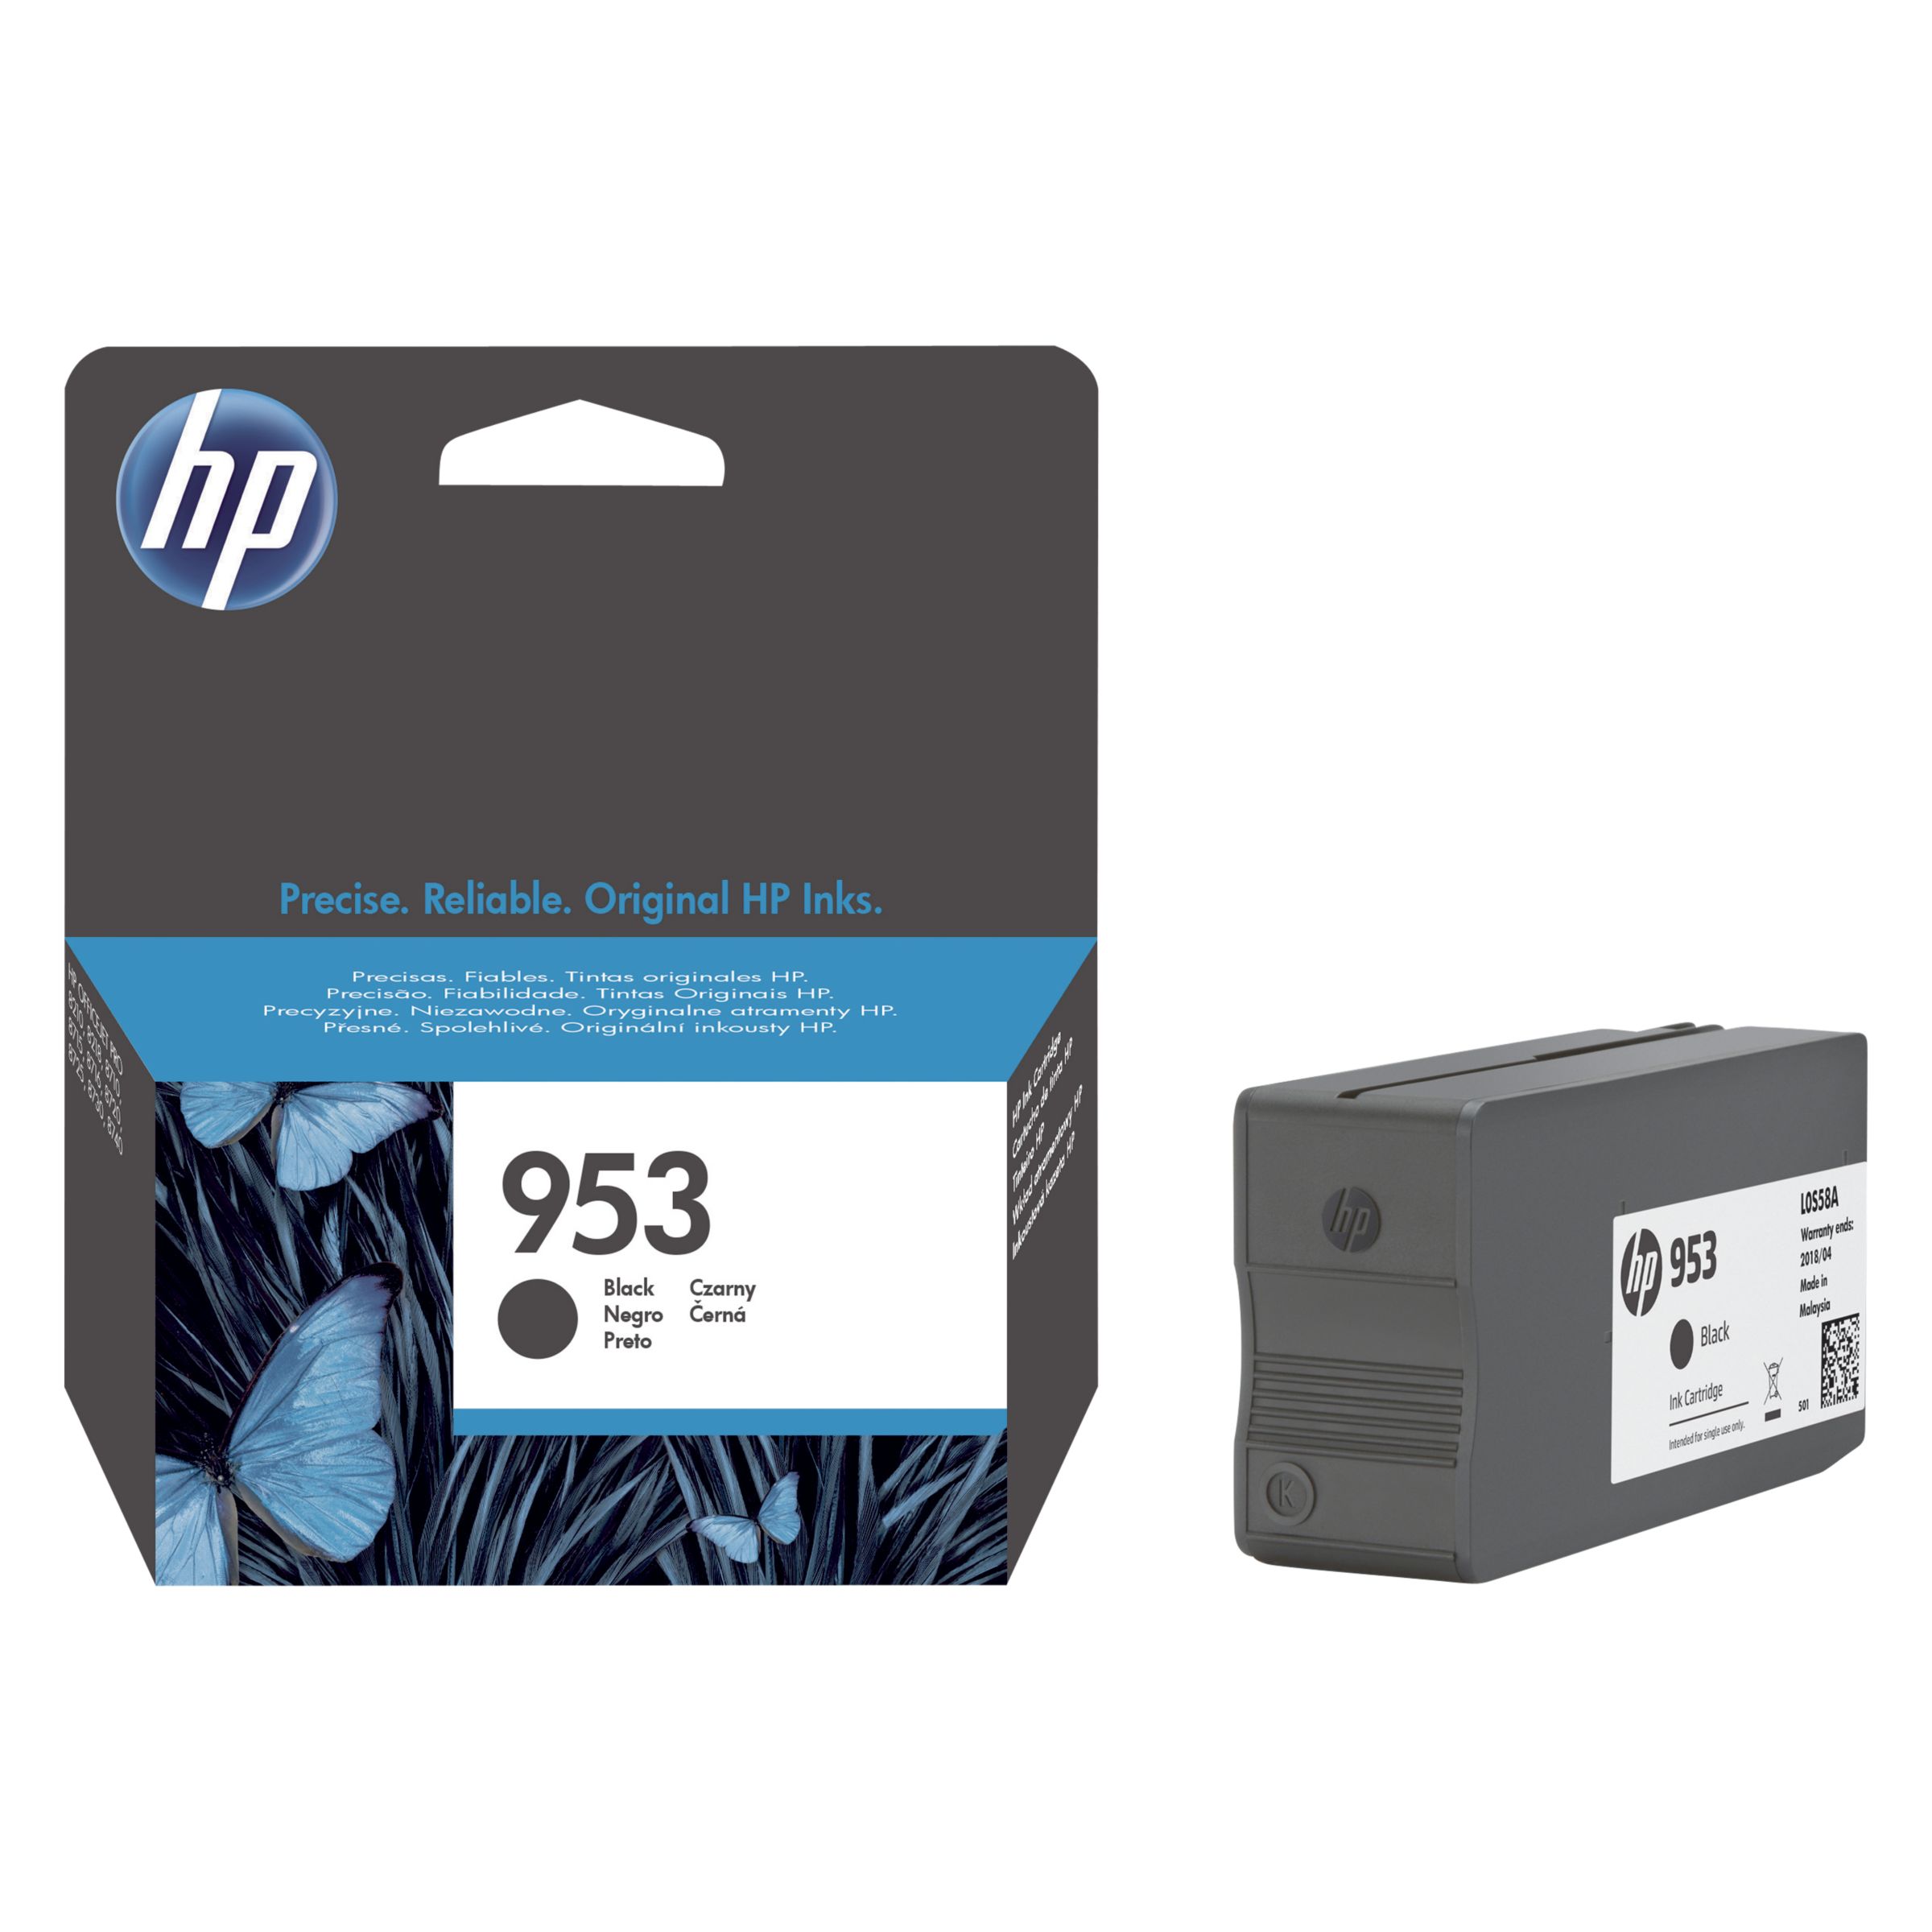 HP 953 Ink Cartridge